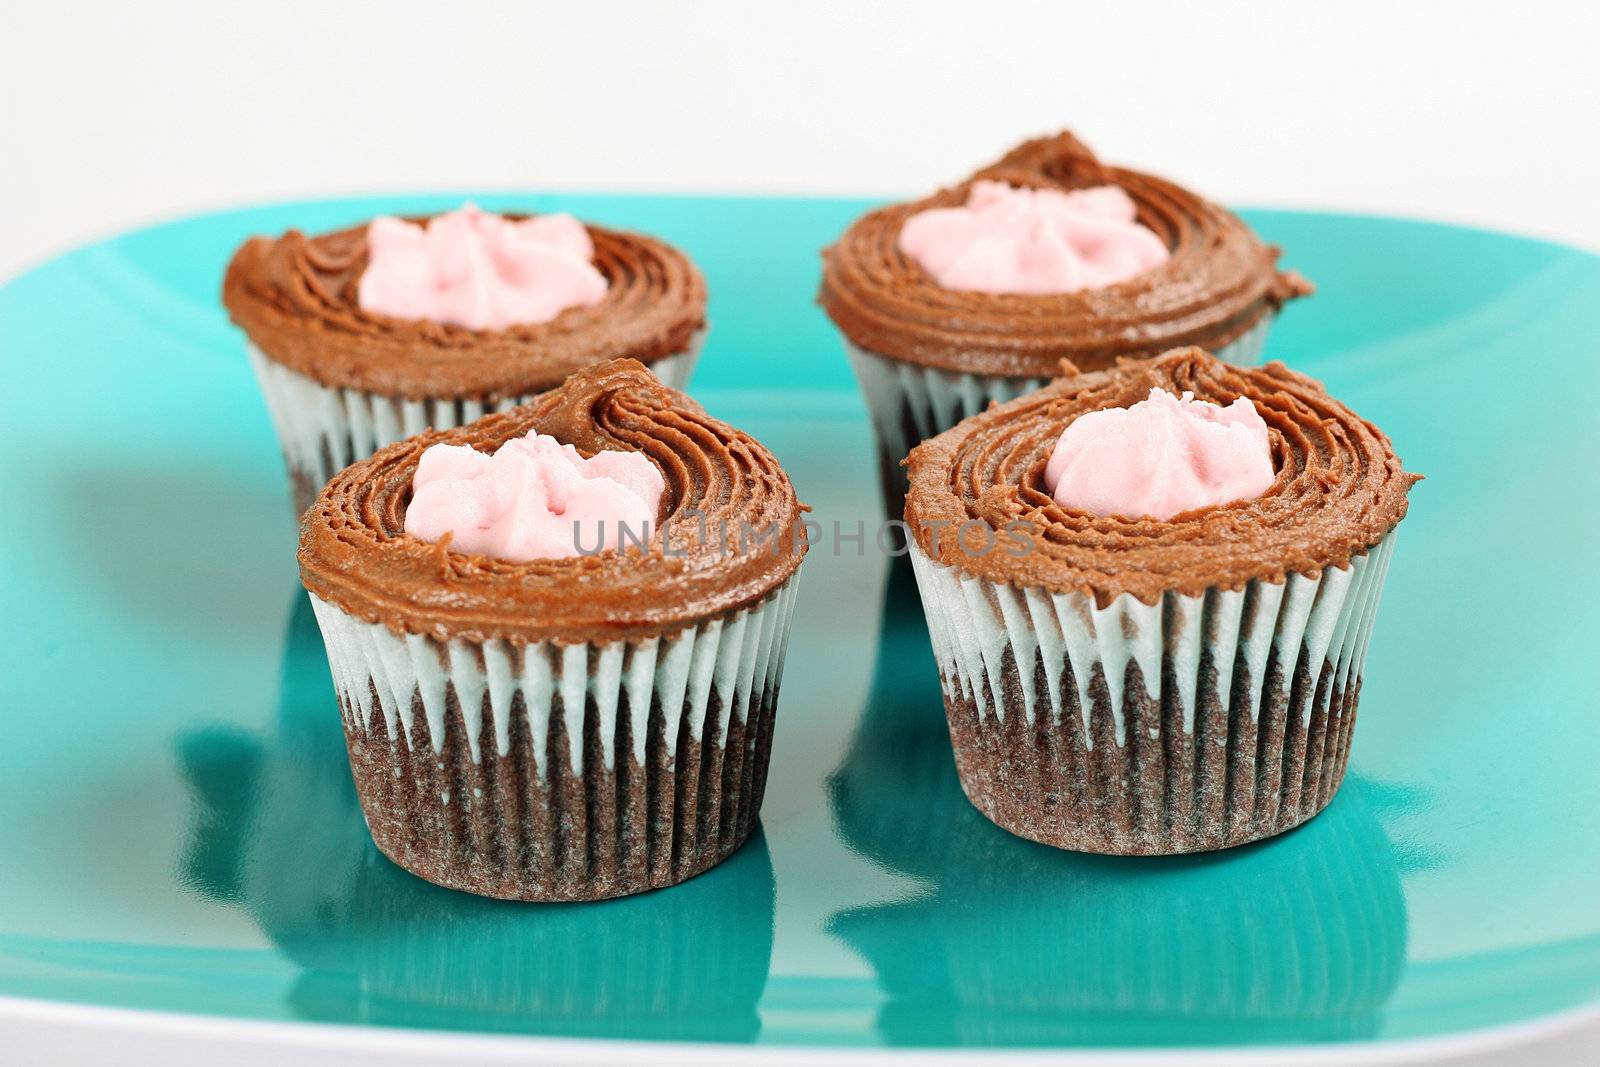 yummy raspberry cream filled cupcakes by creativestock